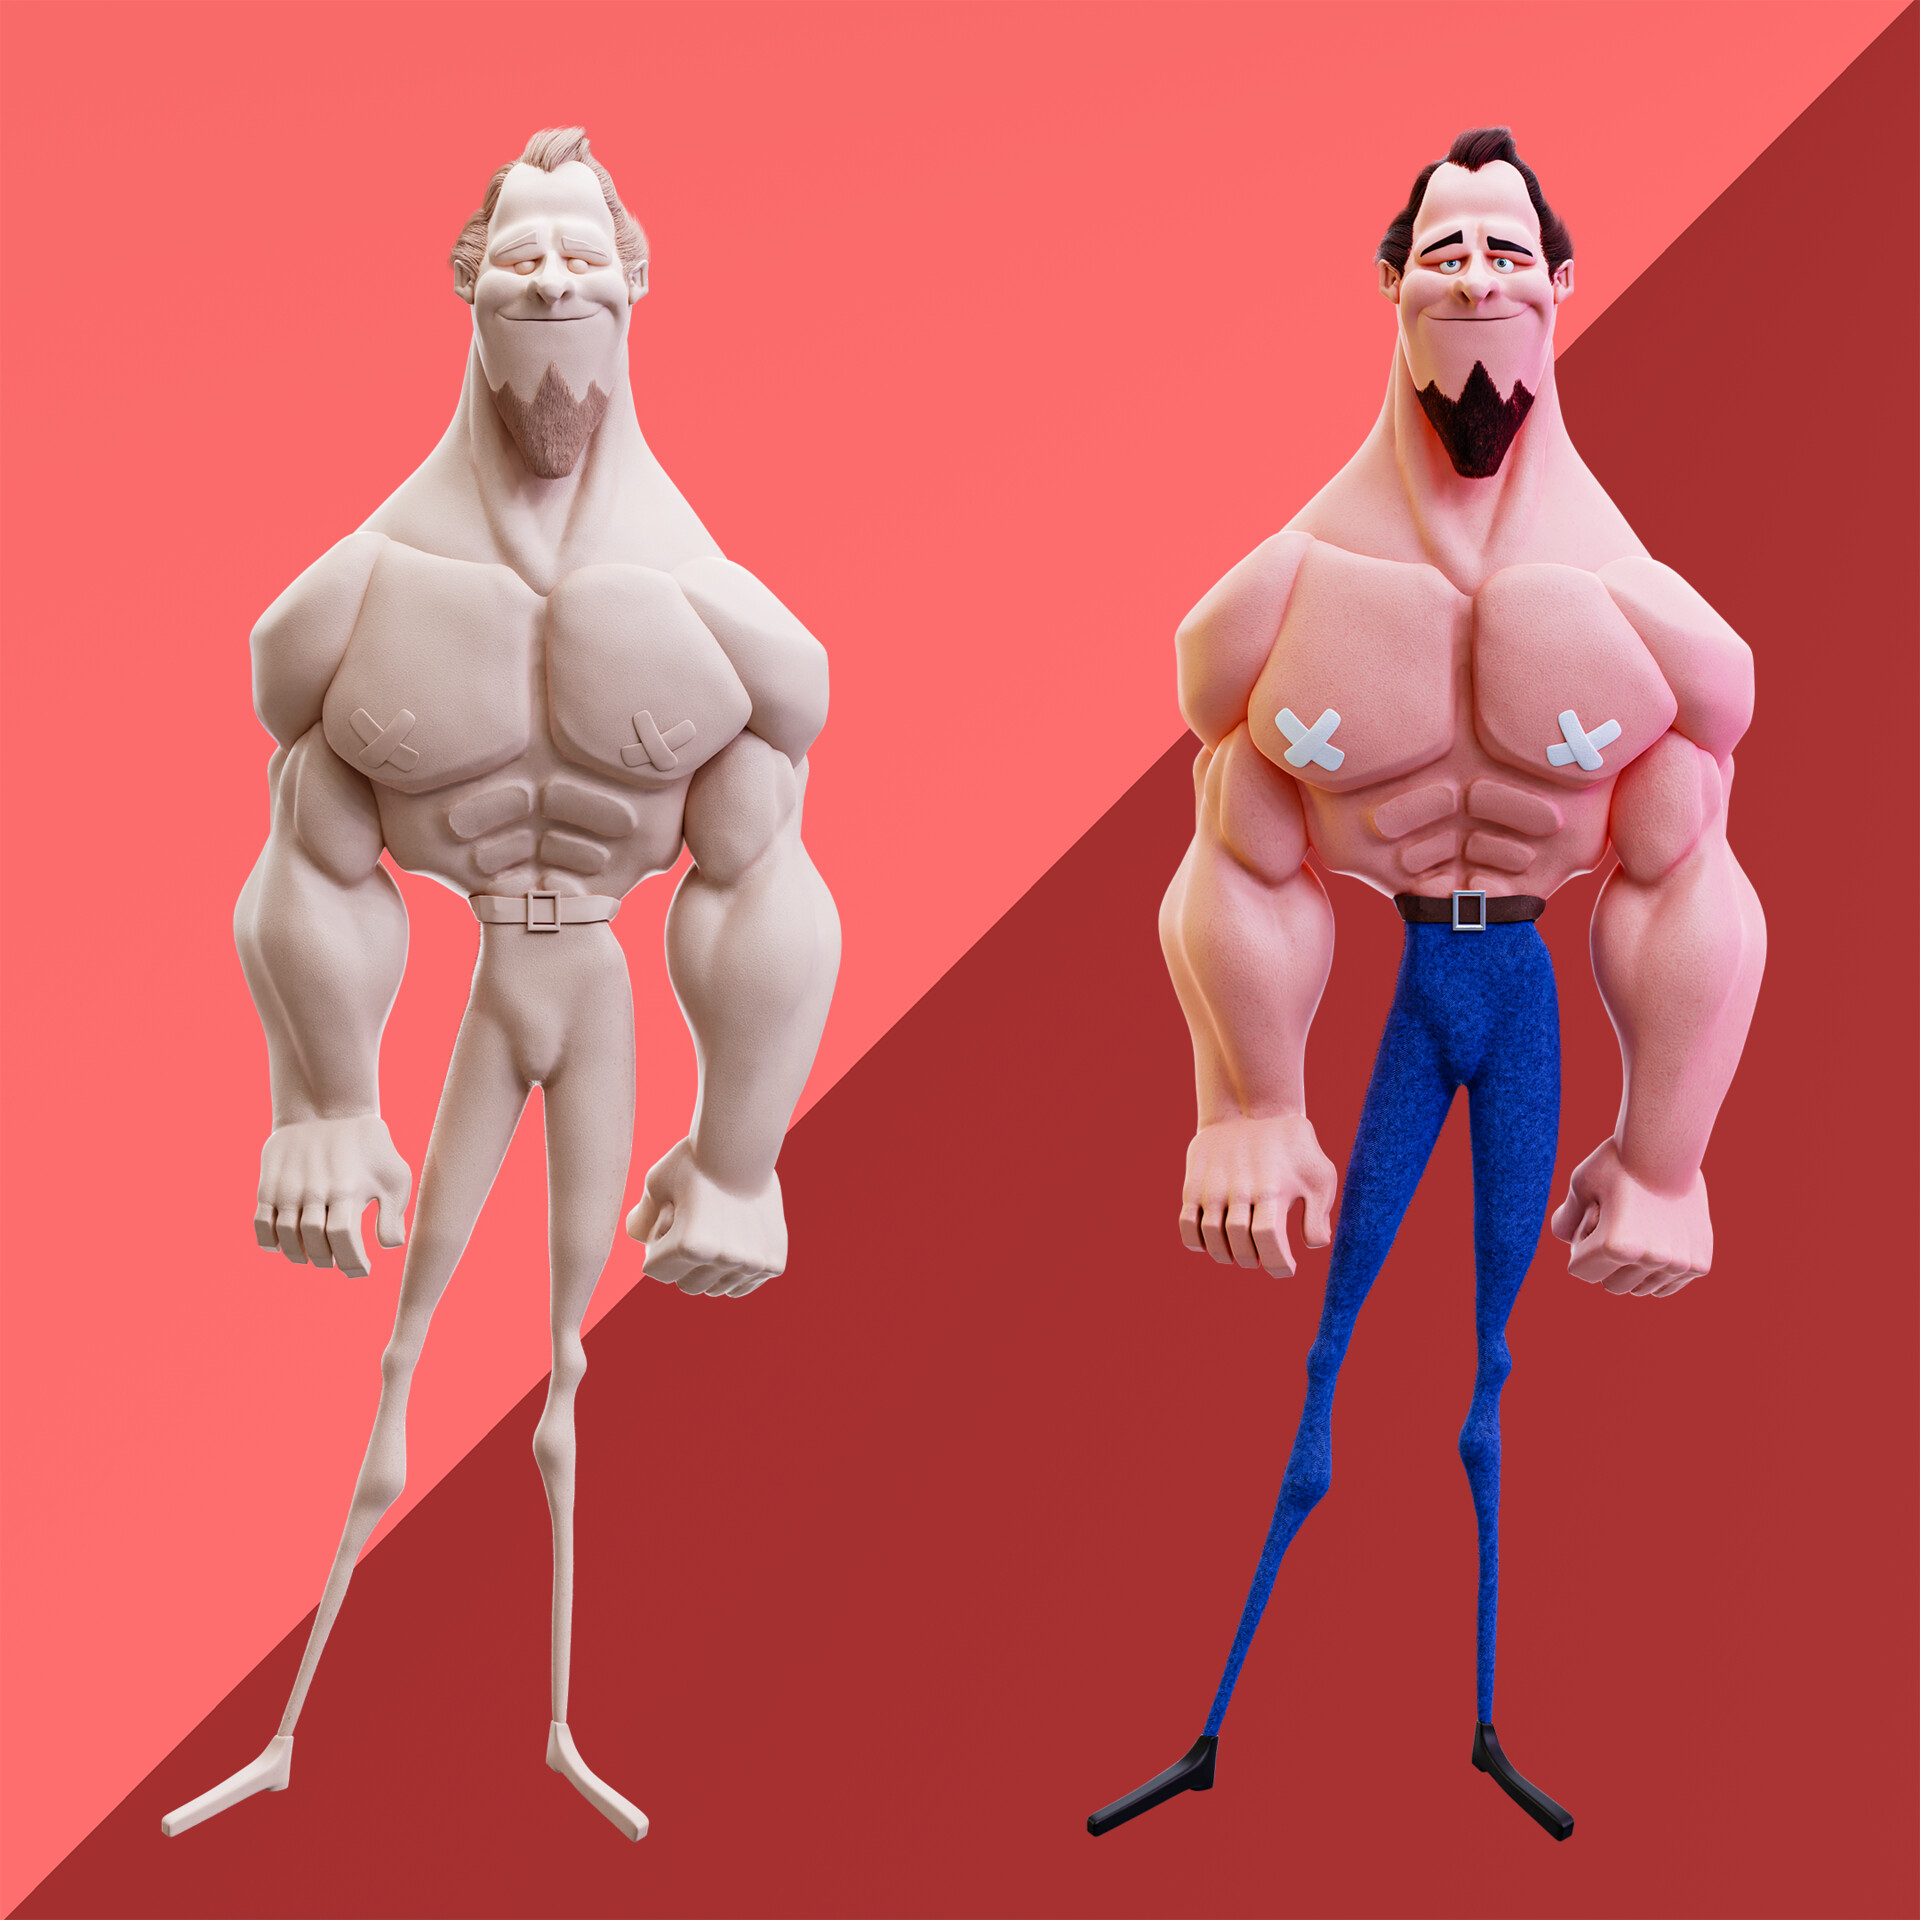 3D model Gym Bro - Muscular man fitness crossfit VR / AR / low